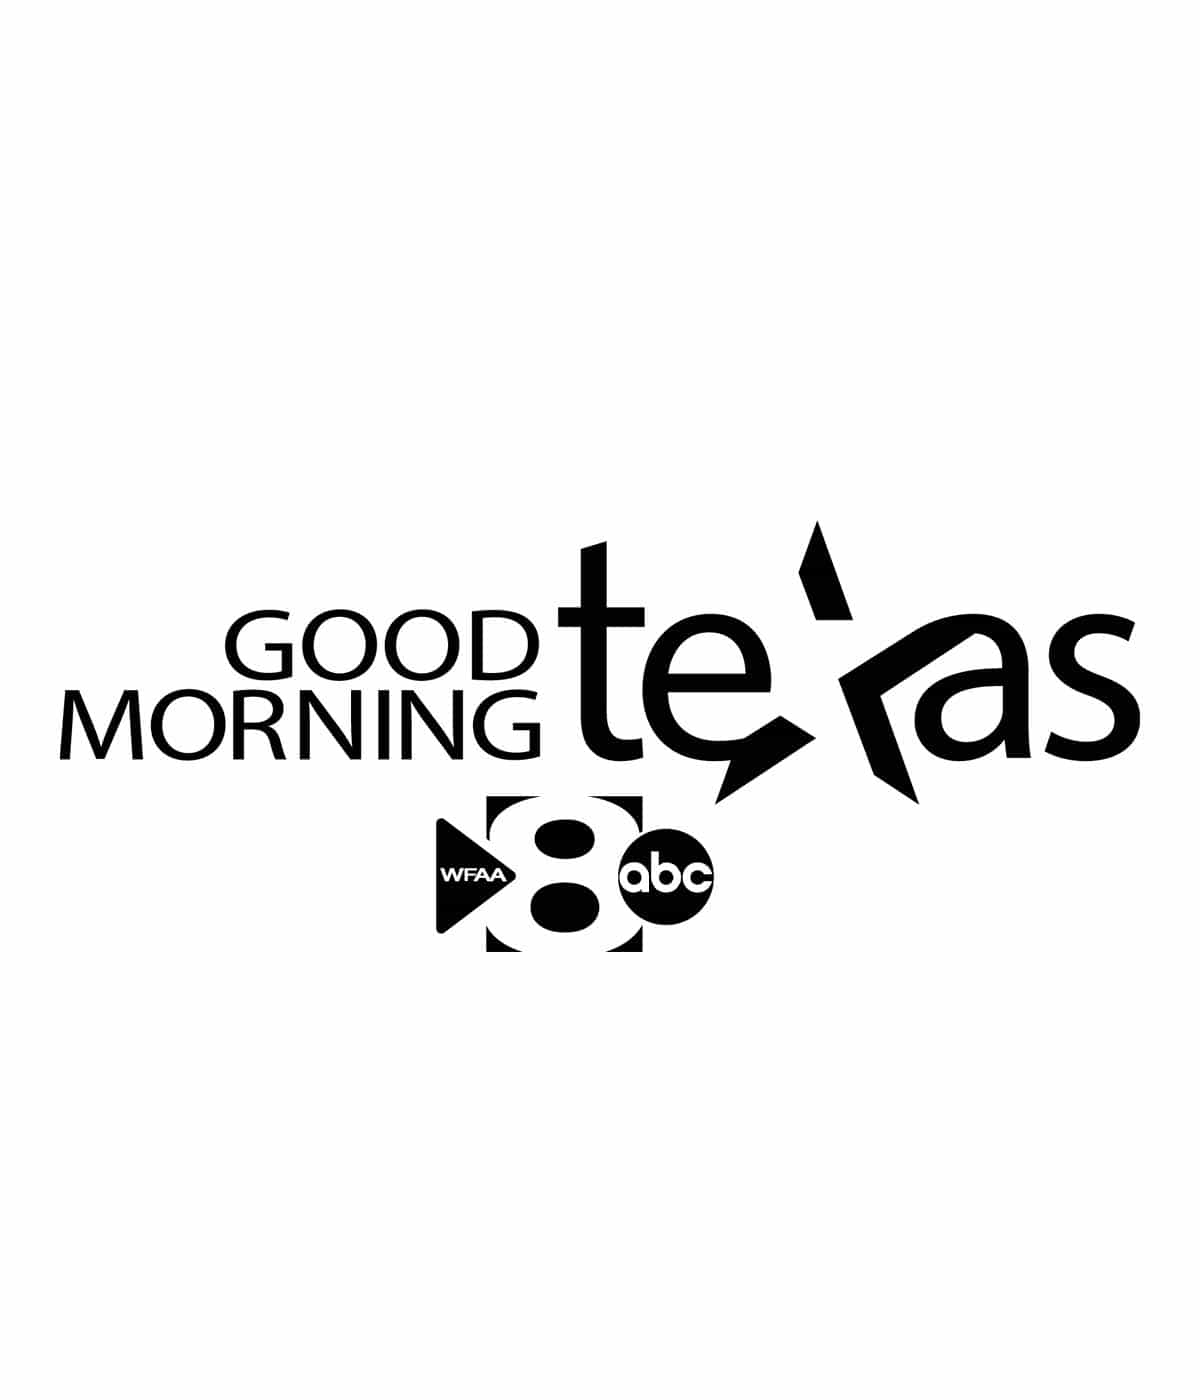 Good Morning Texas ABC Logo - DBAndrea